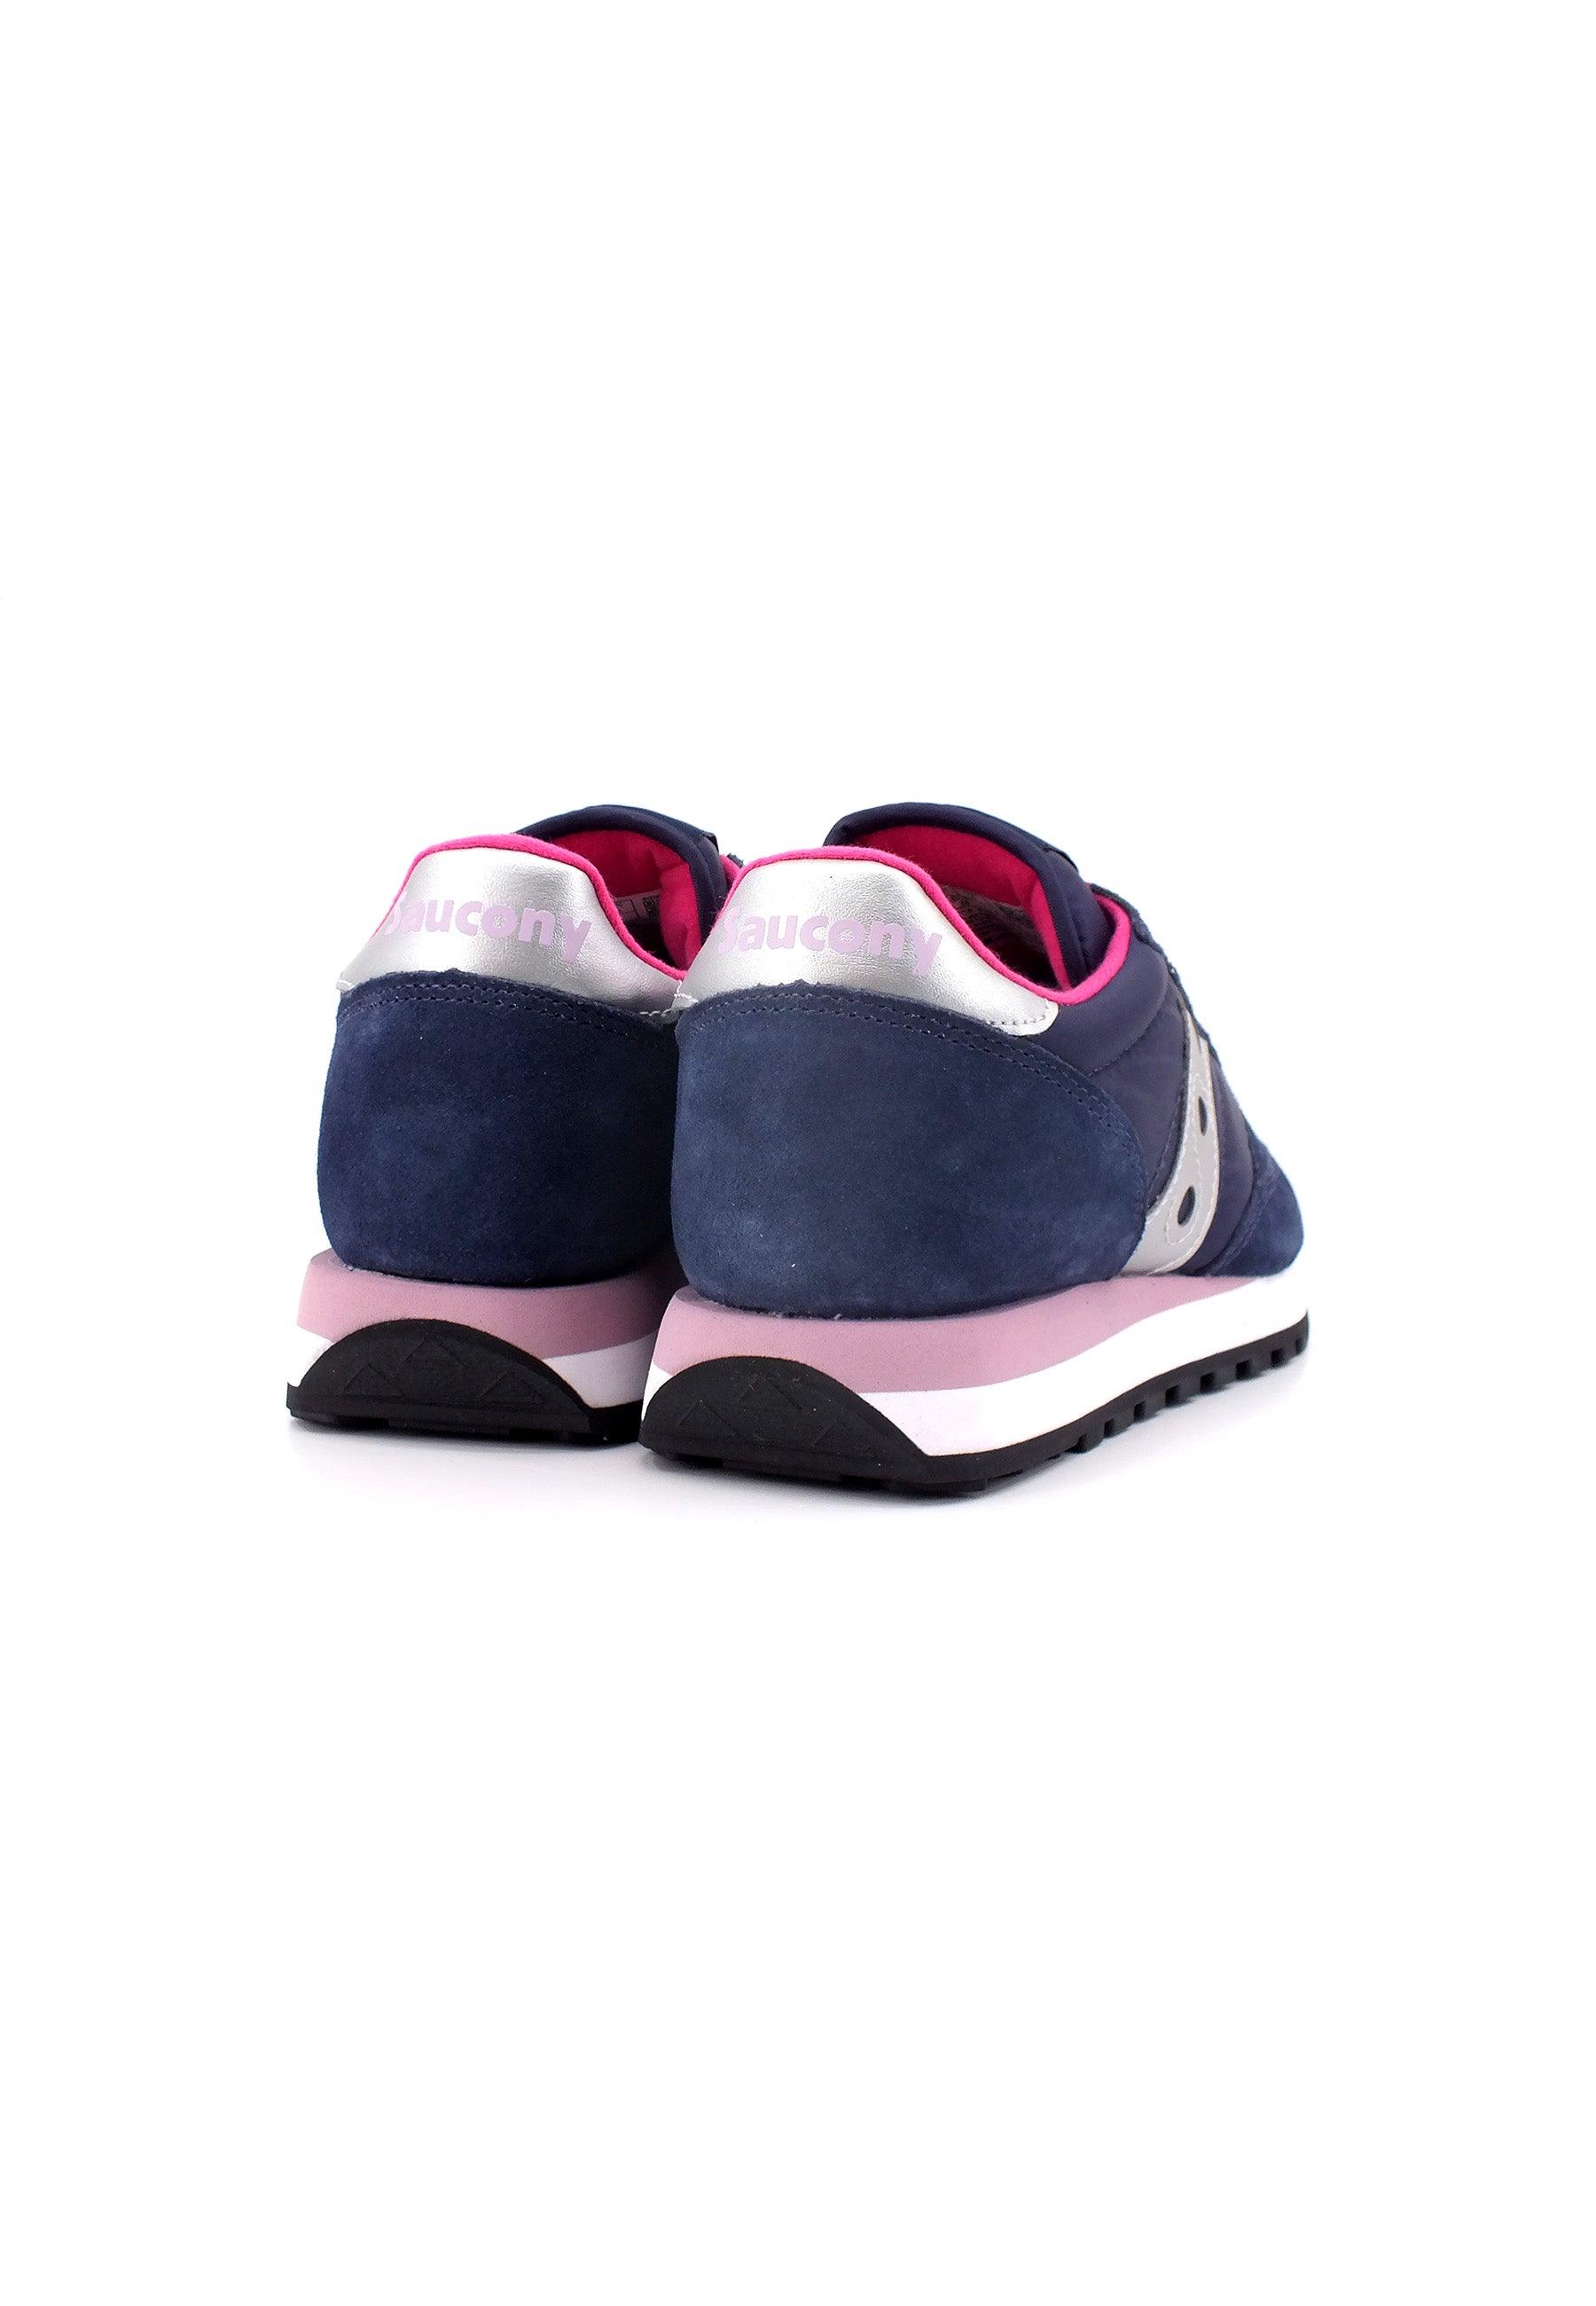 SAUCONY Jazz Original Sneaker Donna Navy Pink S1044-630 - Sandrini Calzature e Abbigliamento